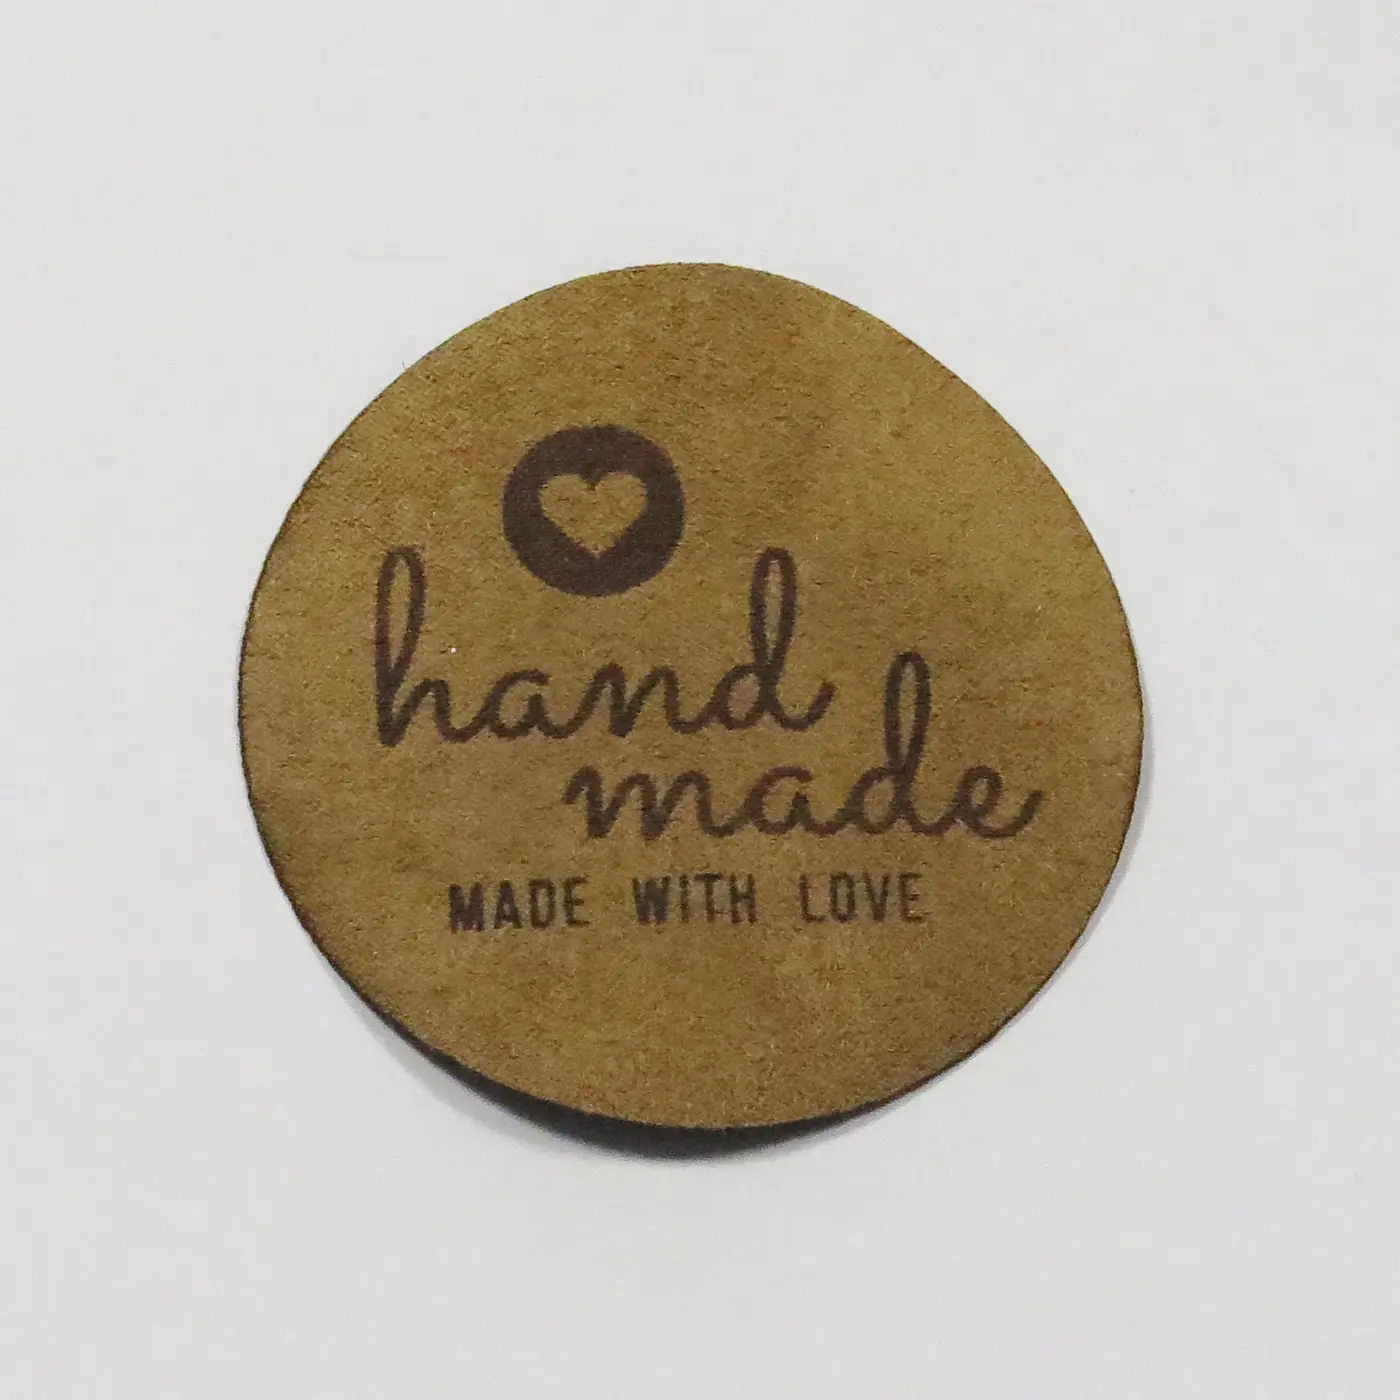 Mærke Handmade "Made with love"